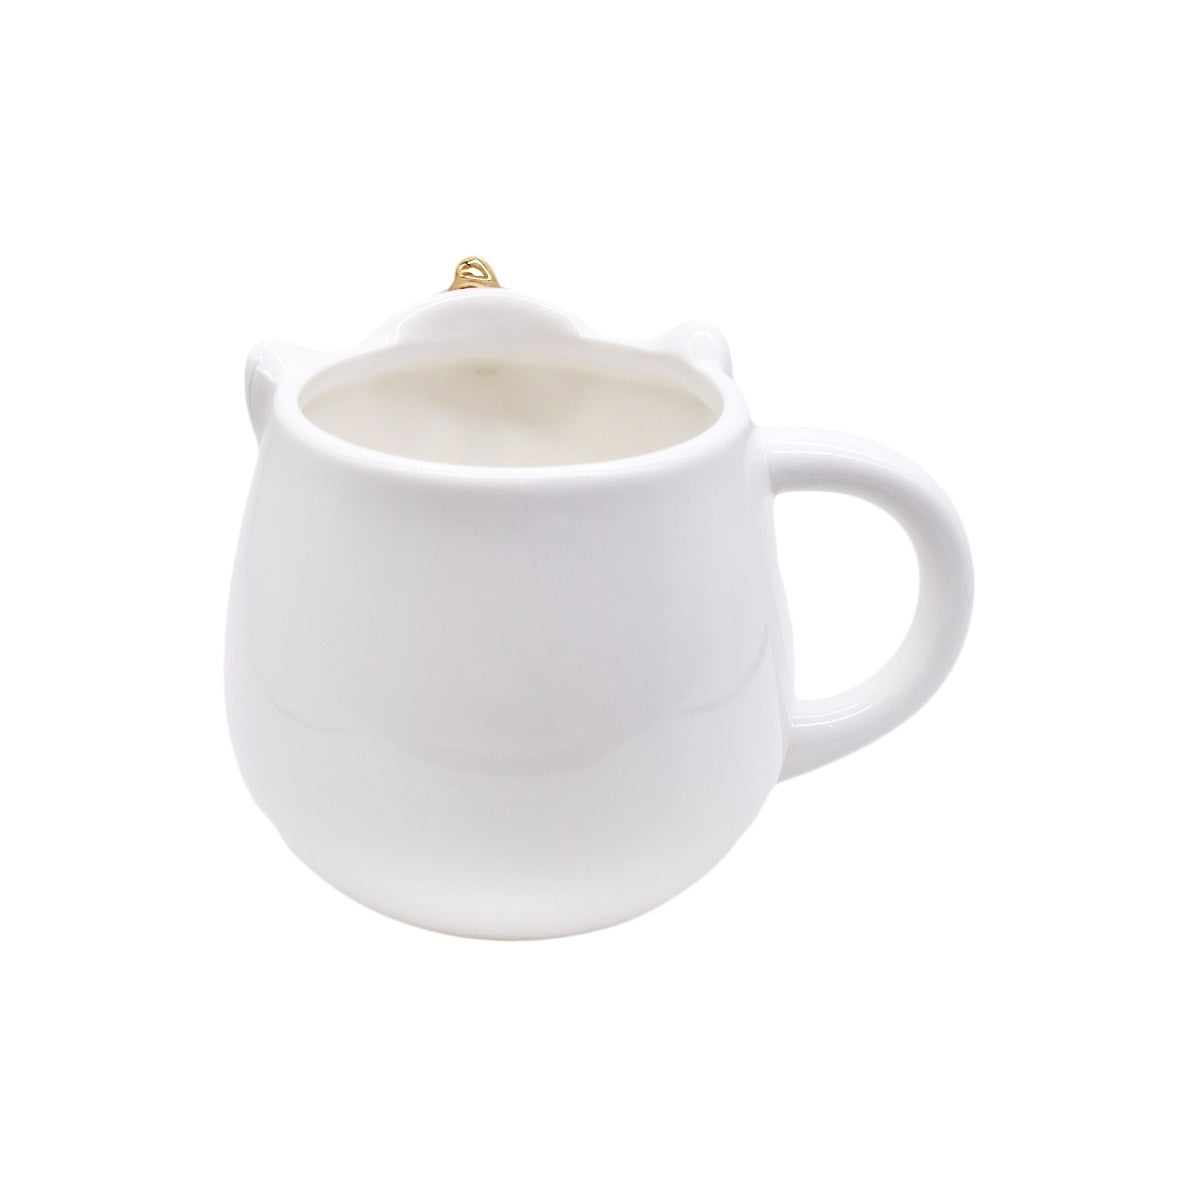 Fancy Ceramic Coffee or Tea Mug with Handle (8548)